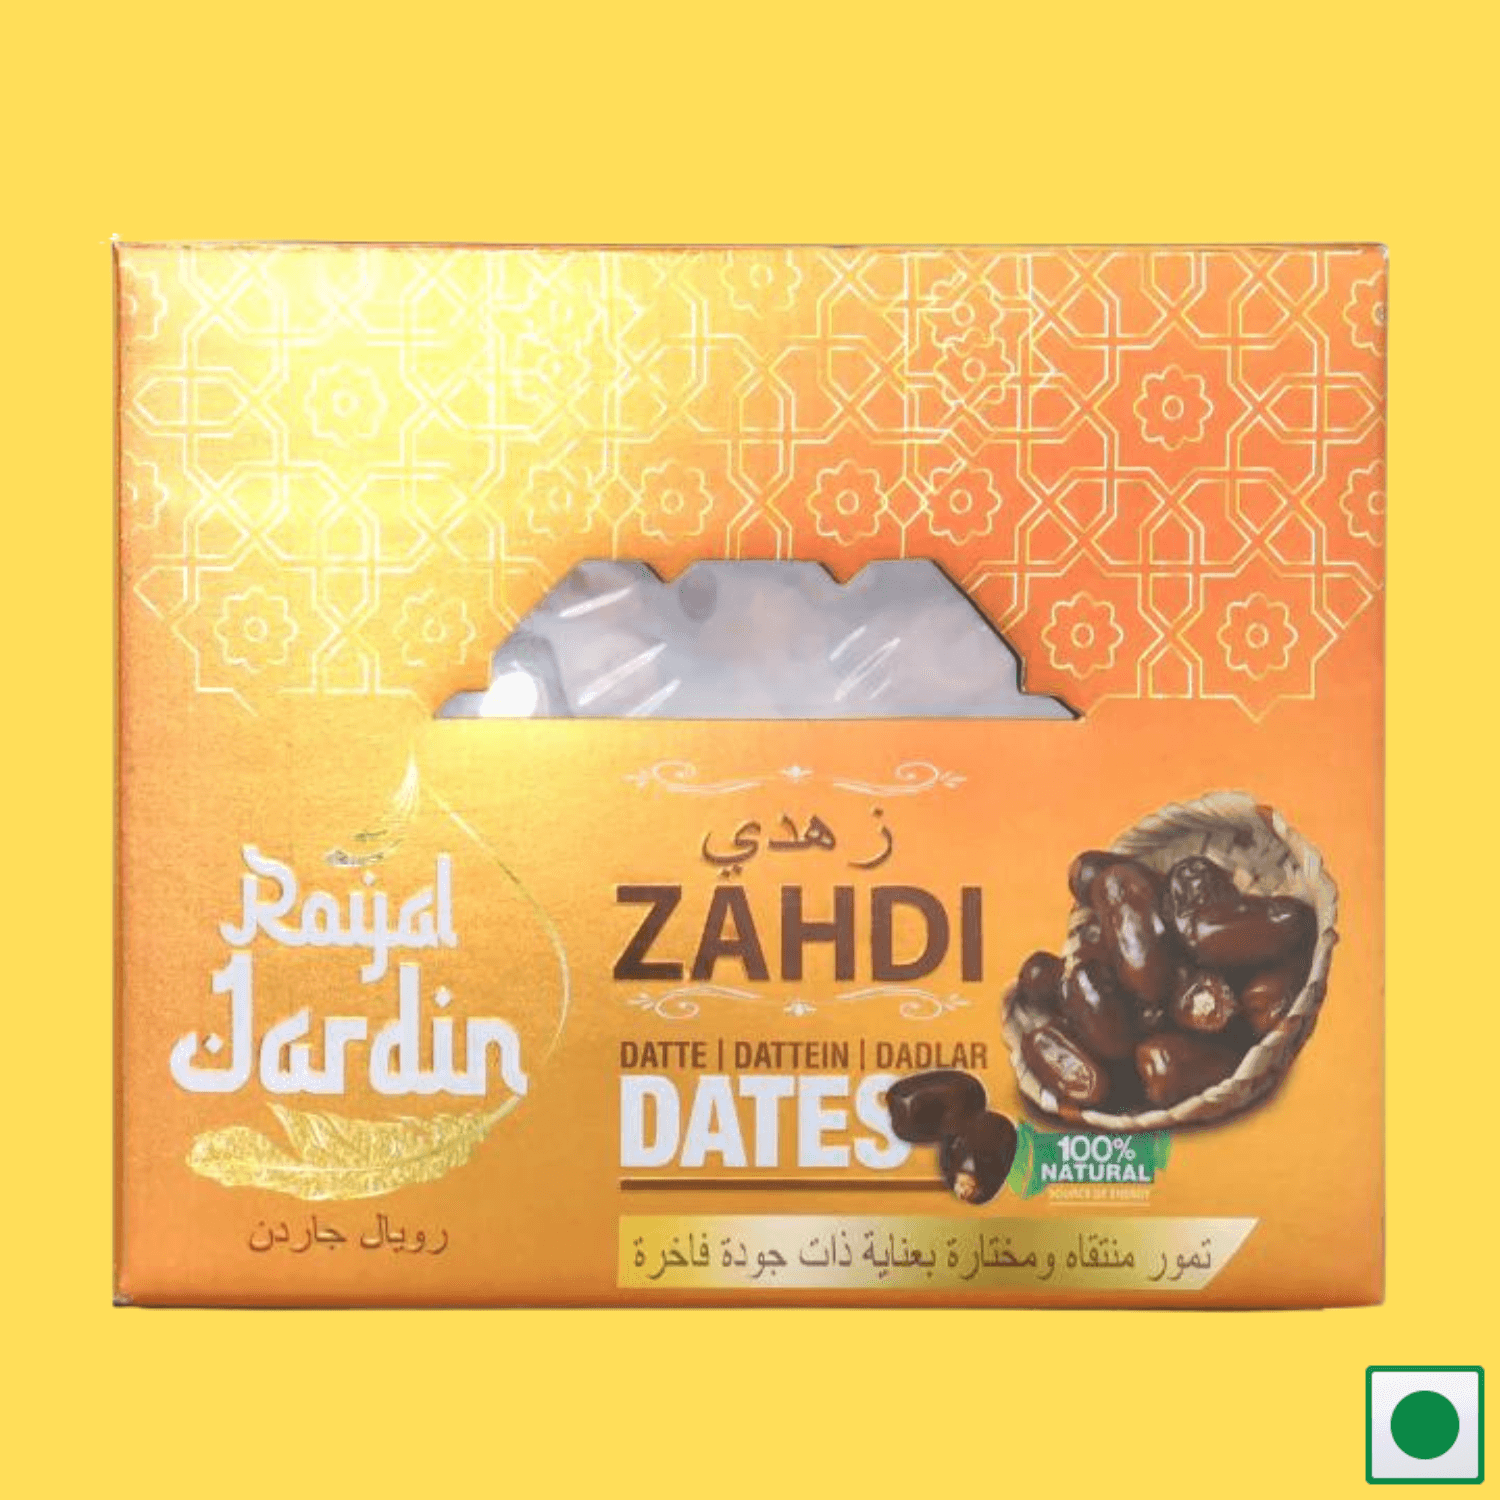 Royal Jardin Zahdi dates Box, 1Kg (IMPORTED) - Super 7 Mart